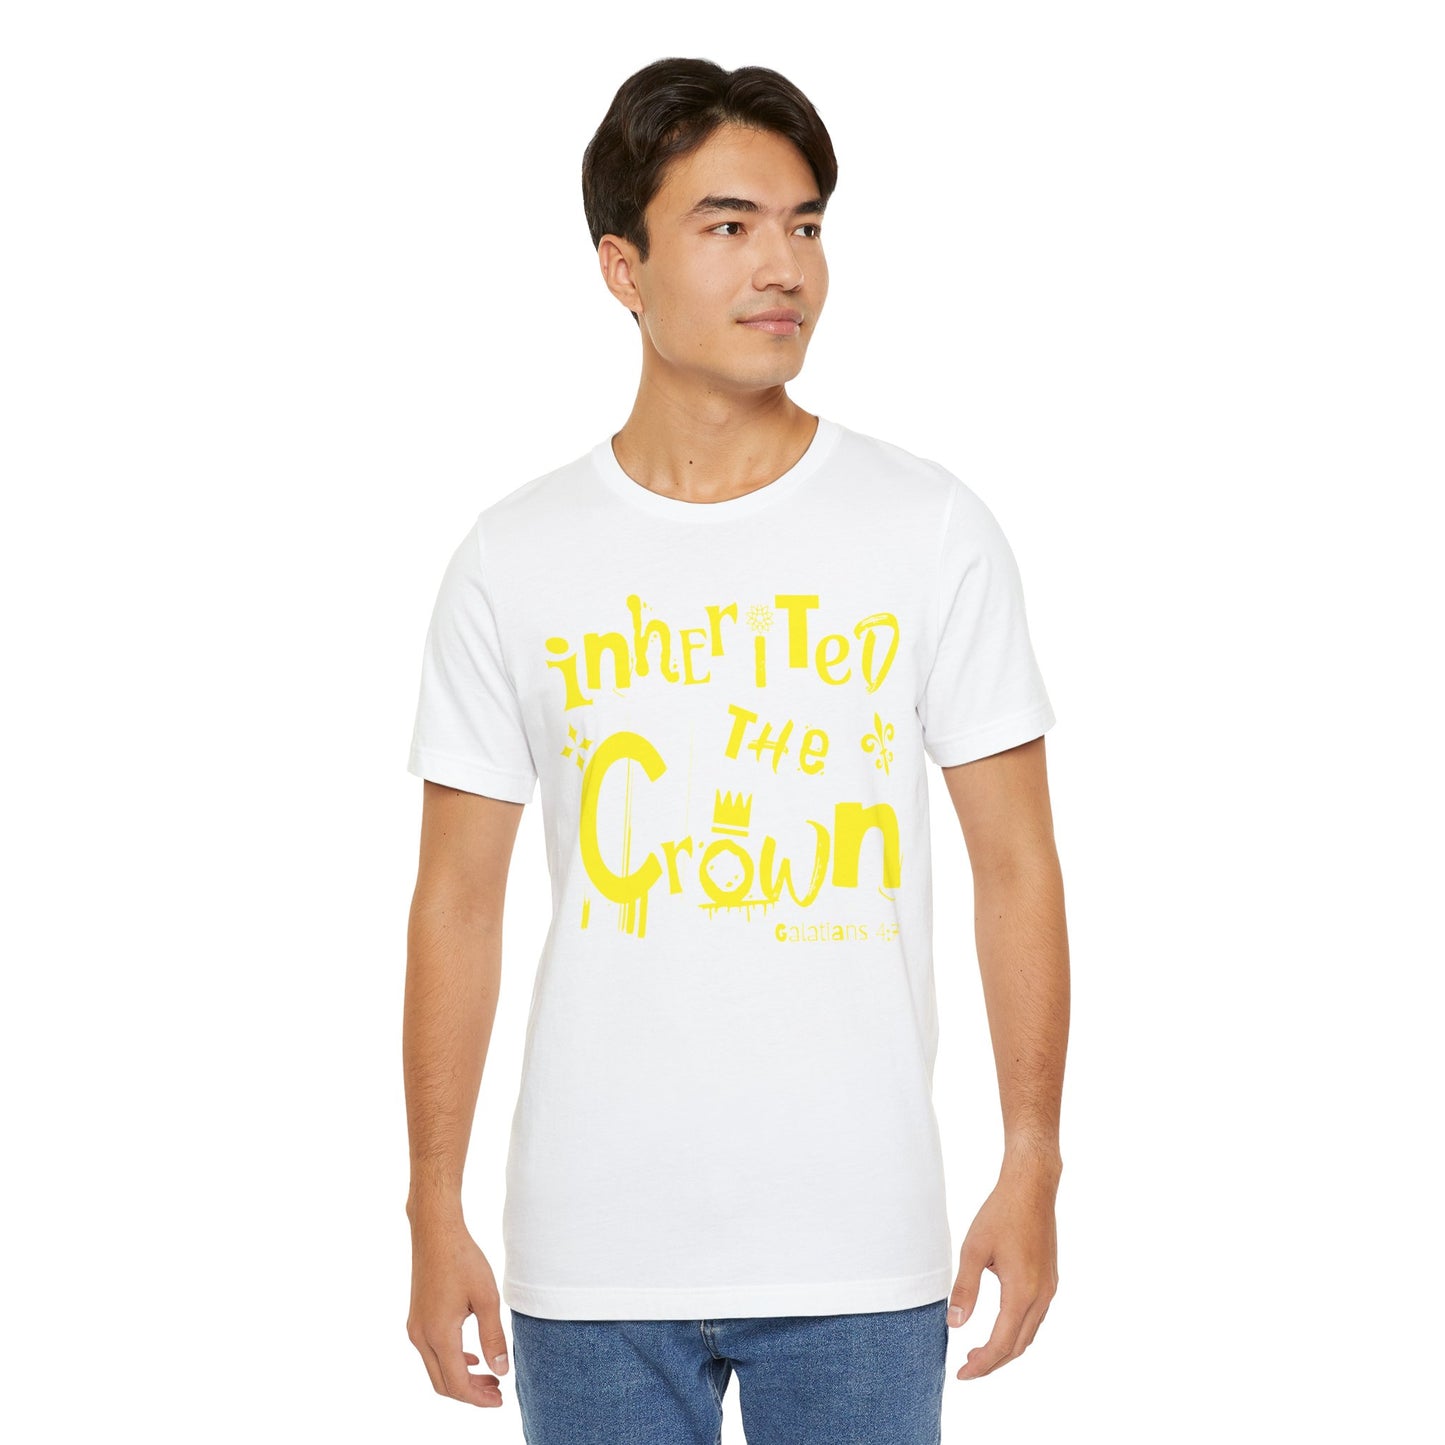 Inherited The Crown Galatians 4:7 - Unisex Tee T-shirt Jersey